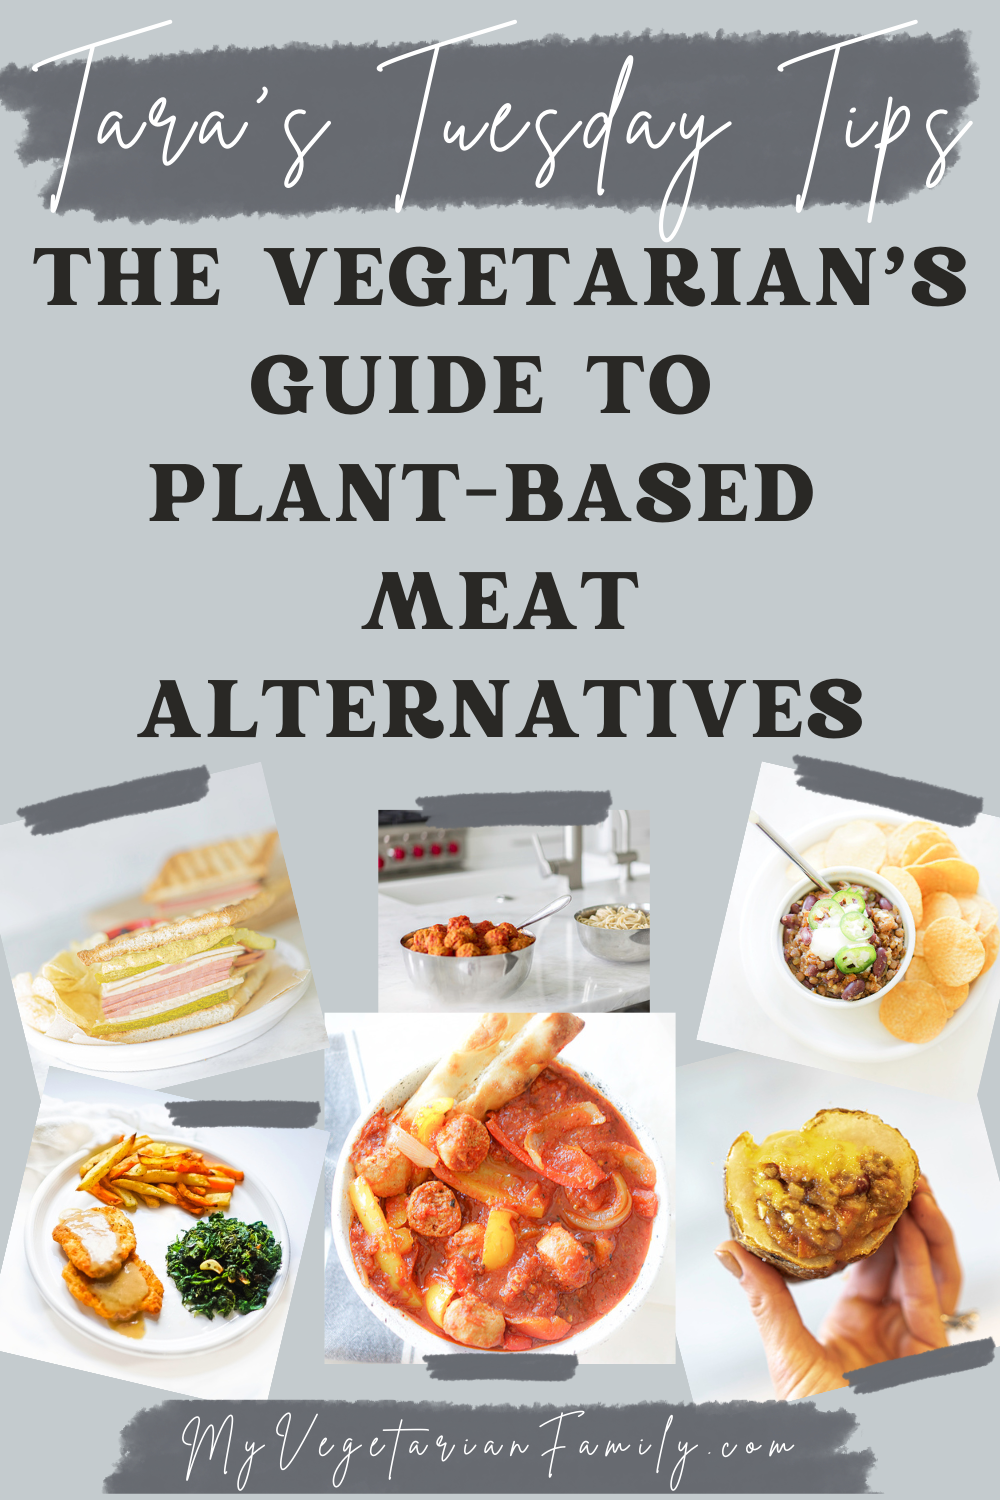 The Vegetarian's Guide To Plant-Based Meat Alternatives | My Vegetarian Family | Tara's Tuesday Tips #nutritiontips #tarastuesdaytips #fakemeatguide